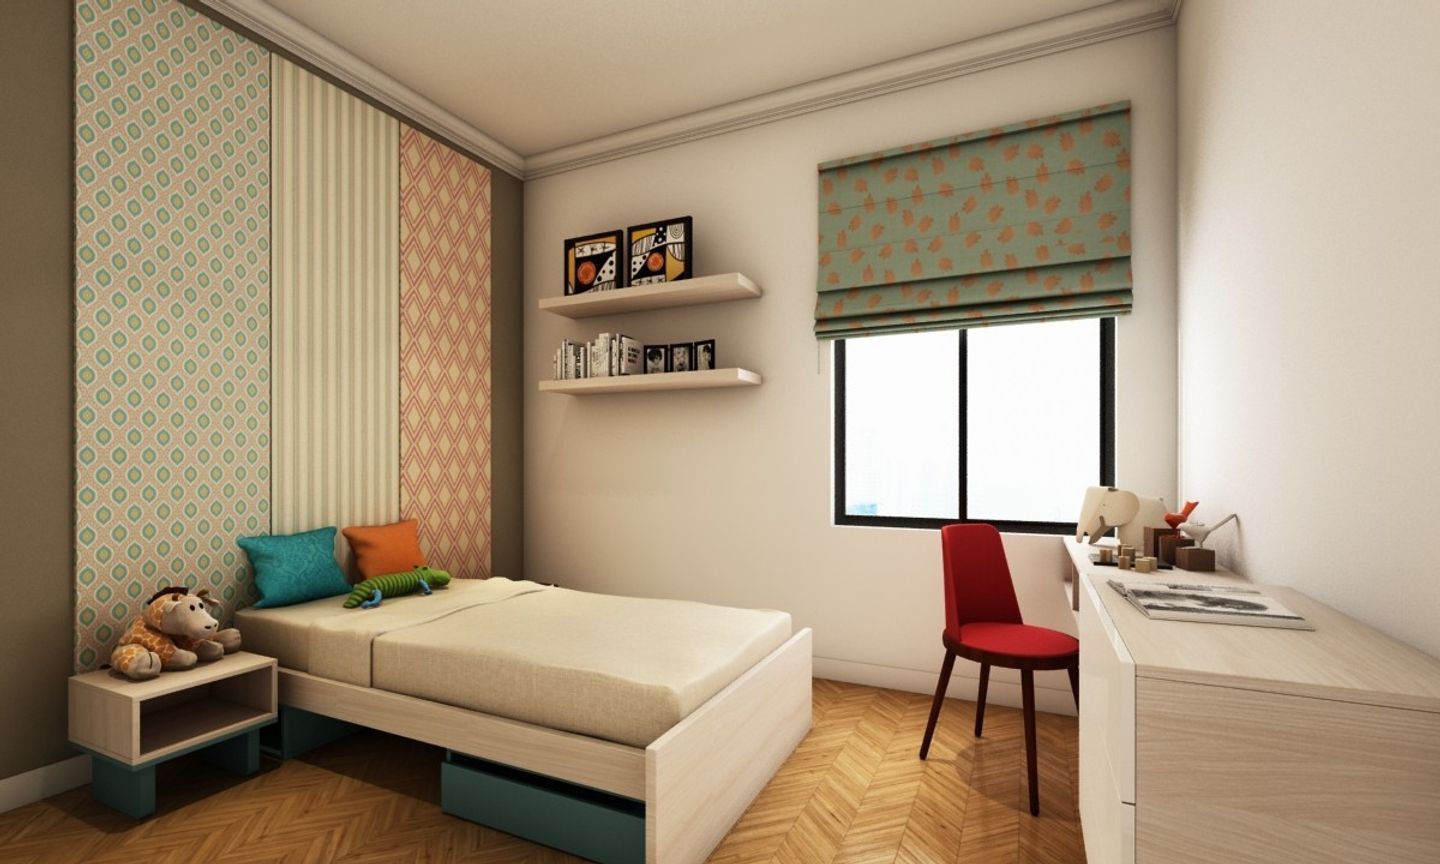 Contemporary Kid's Bedroom Design With Bedroom Wallpaper